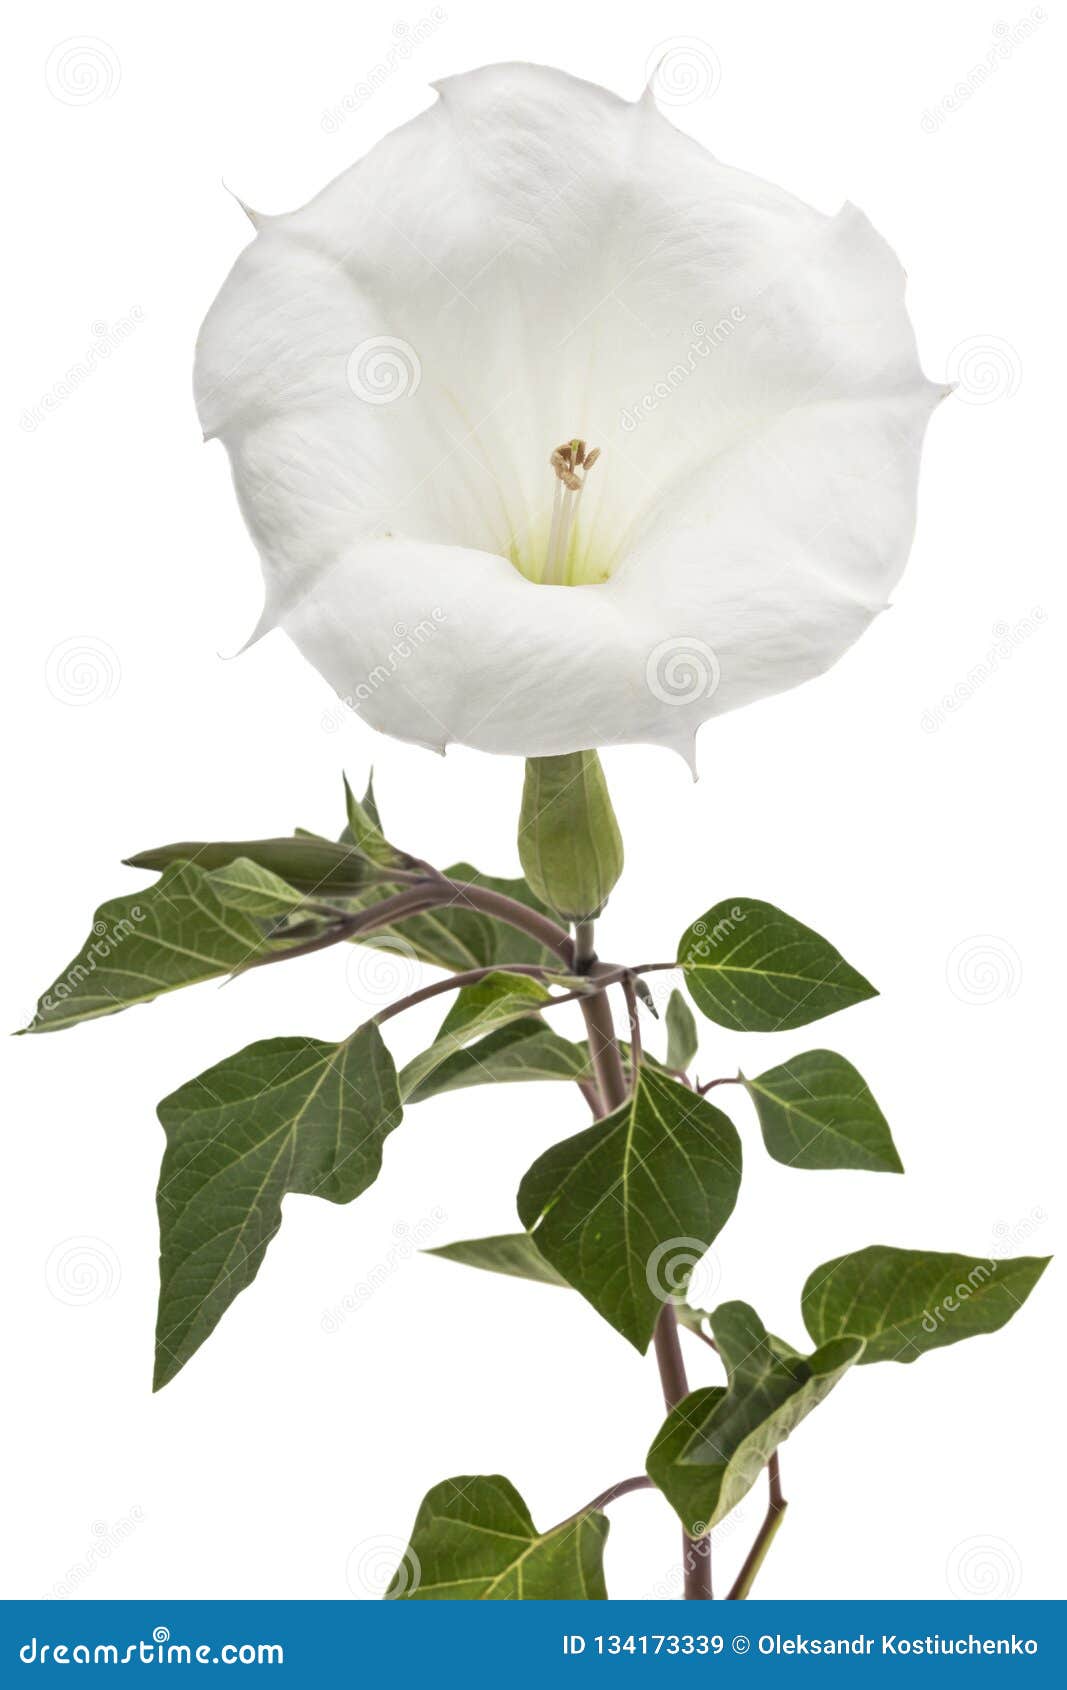 datura flower, dope, stramonium, thorn-apple, jimsonweed,  on white background